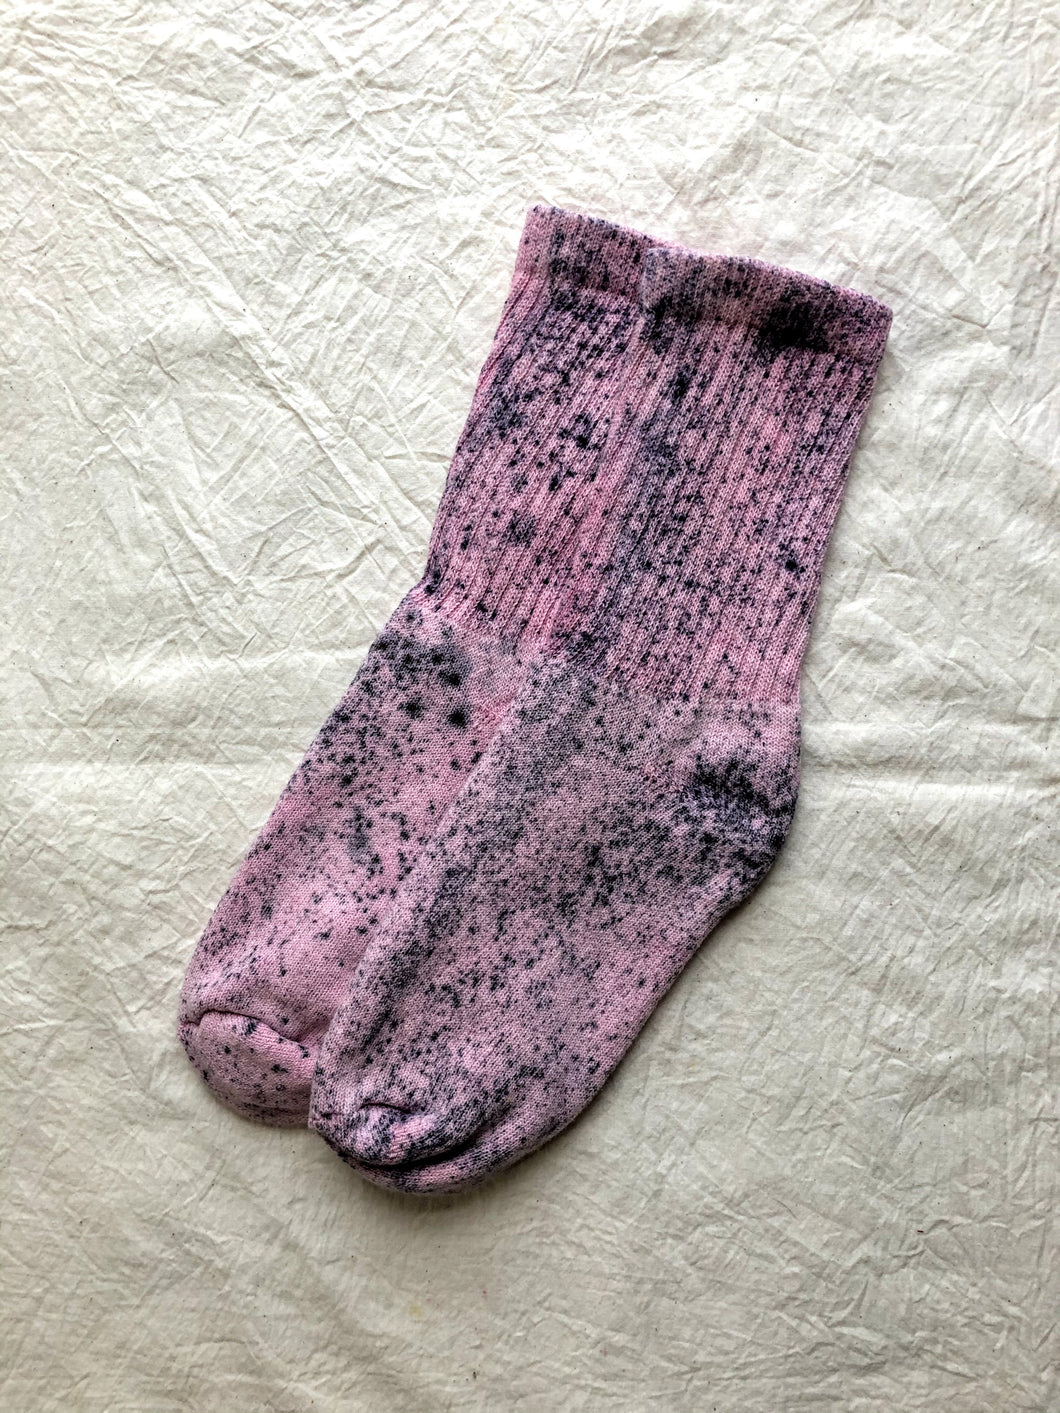 Botanical Dye Organic Cotton Socks - Bubblegum Speckle